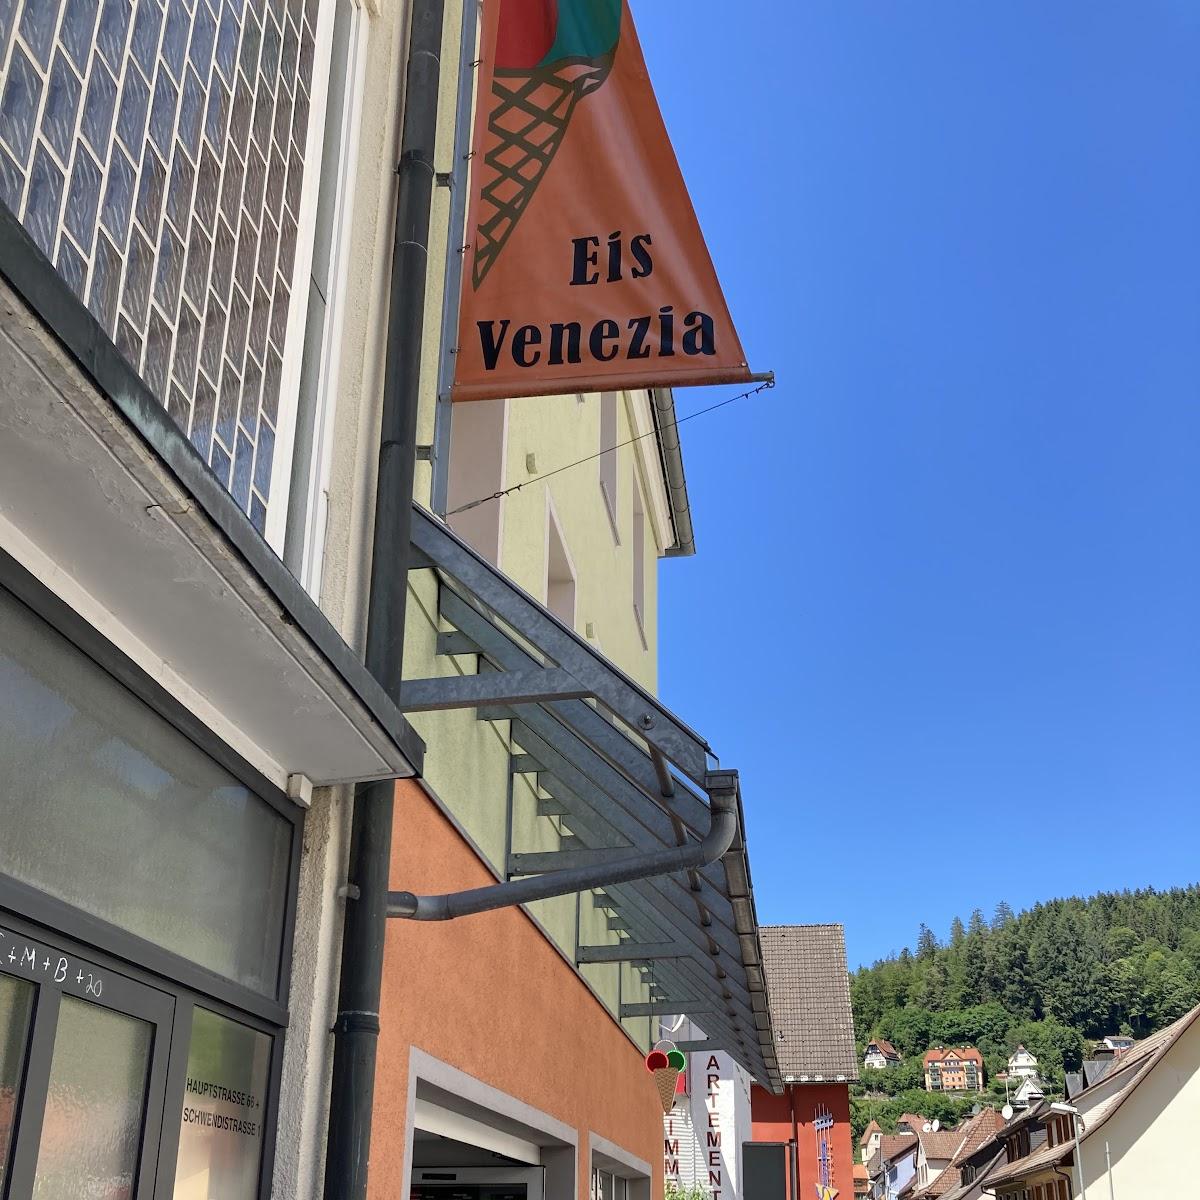 Restaurant "Eis Café Venezia" in Triberg im Schwarzwald